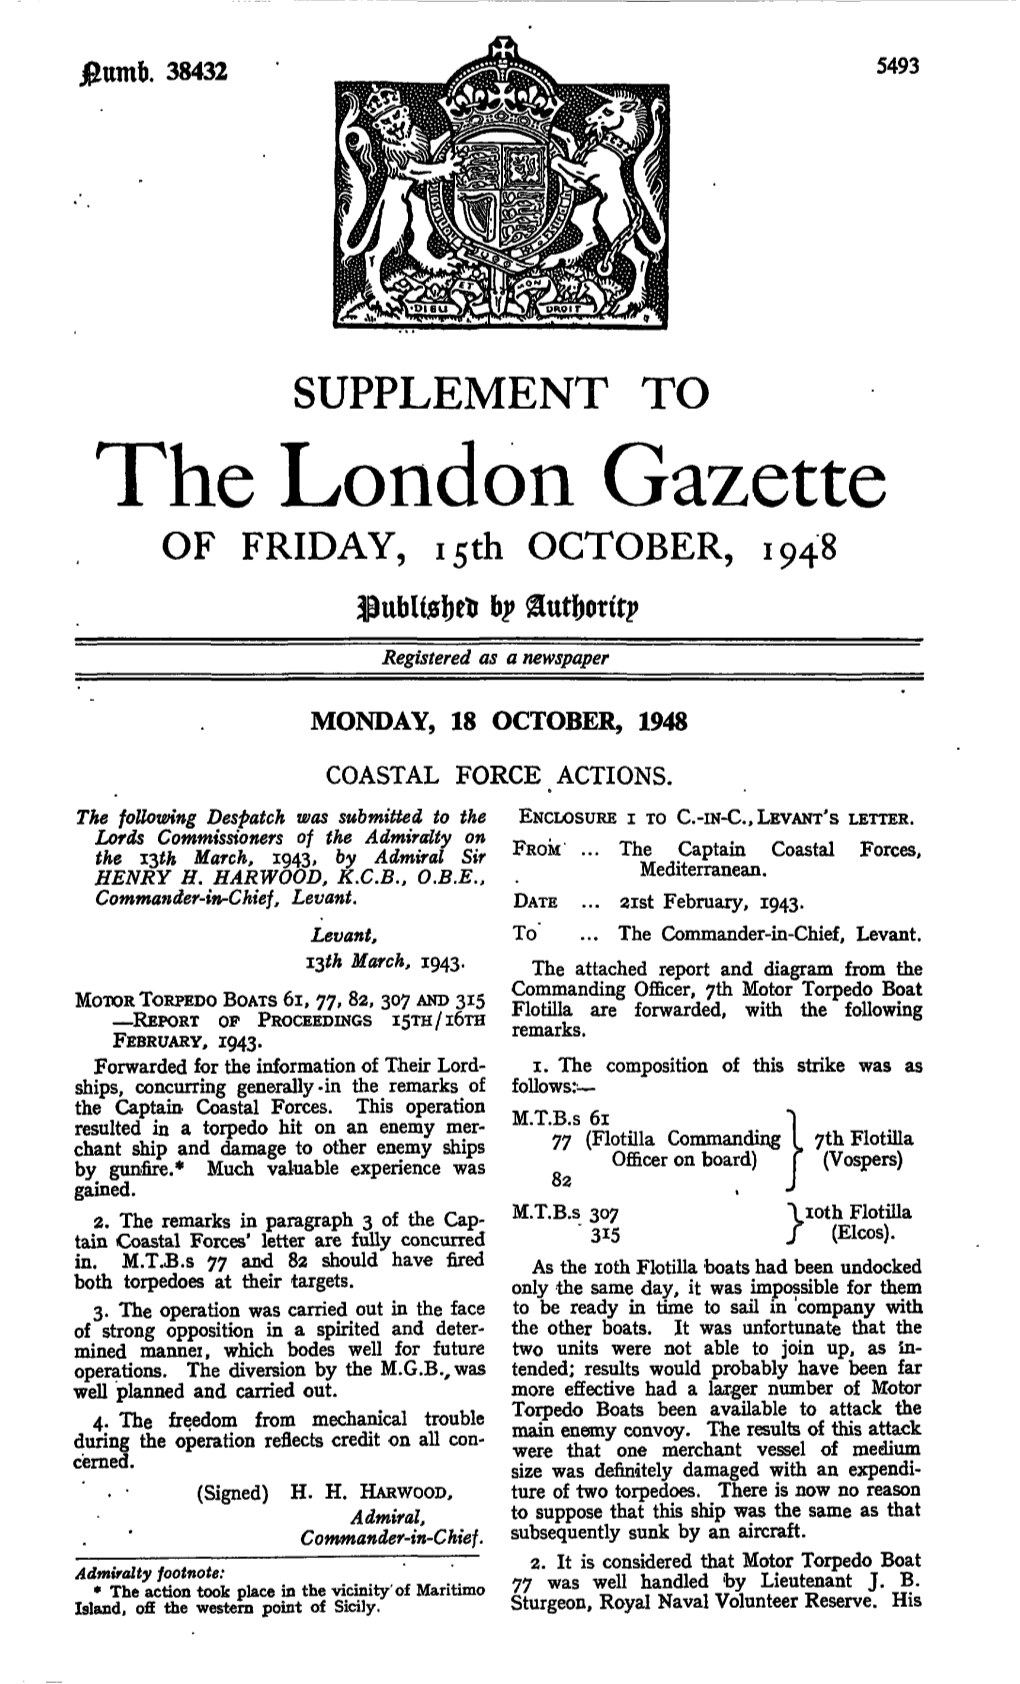 The London Gazette of FRIDAY, I Sth OCTOBER, 1948